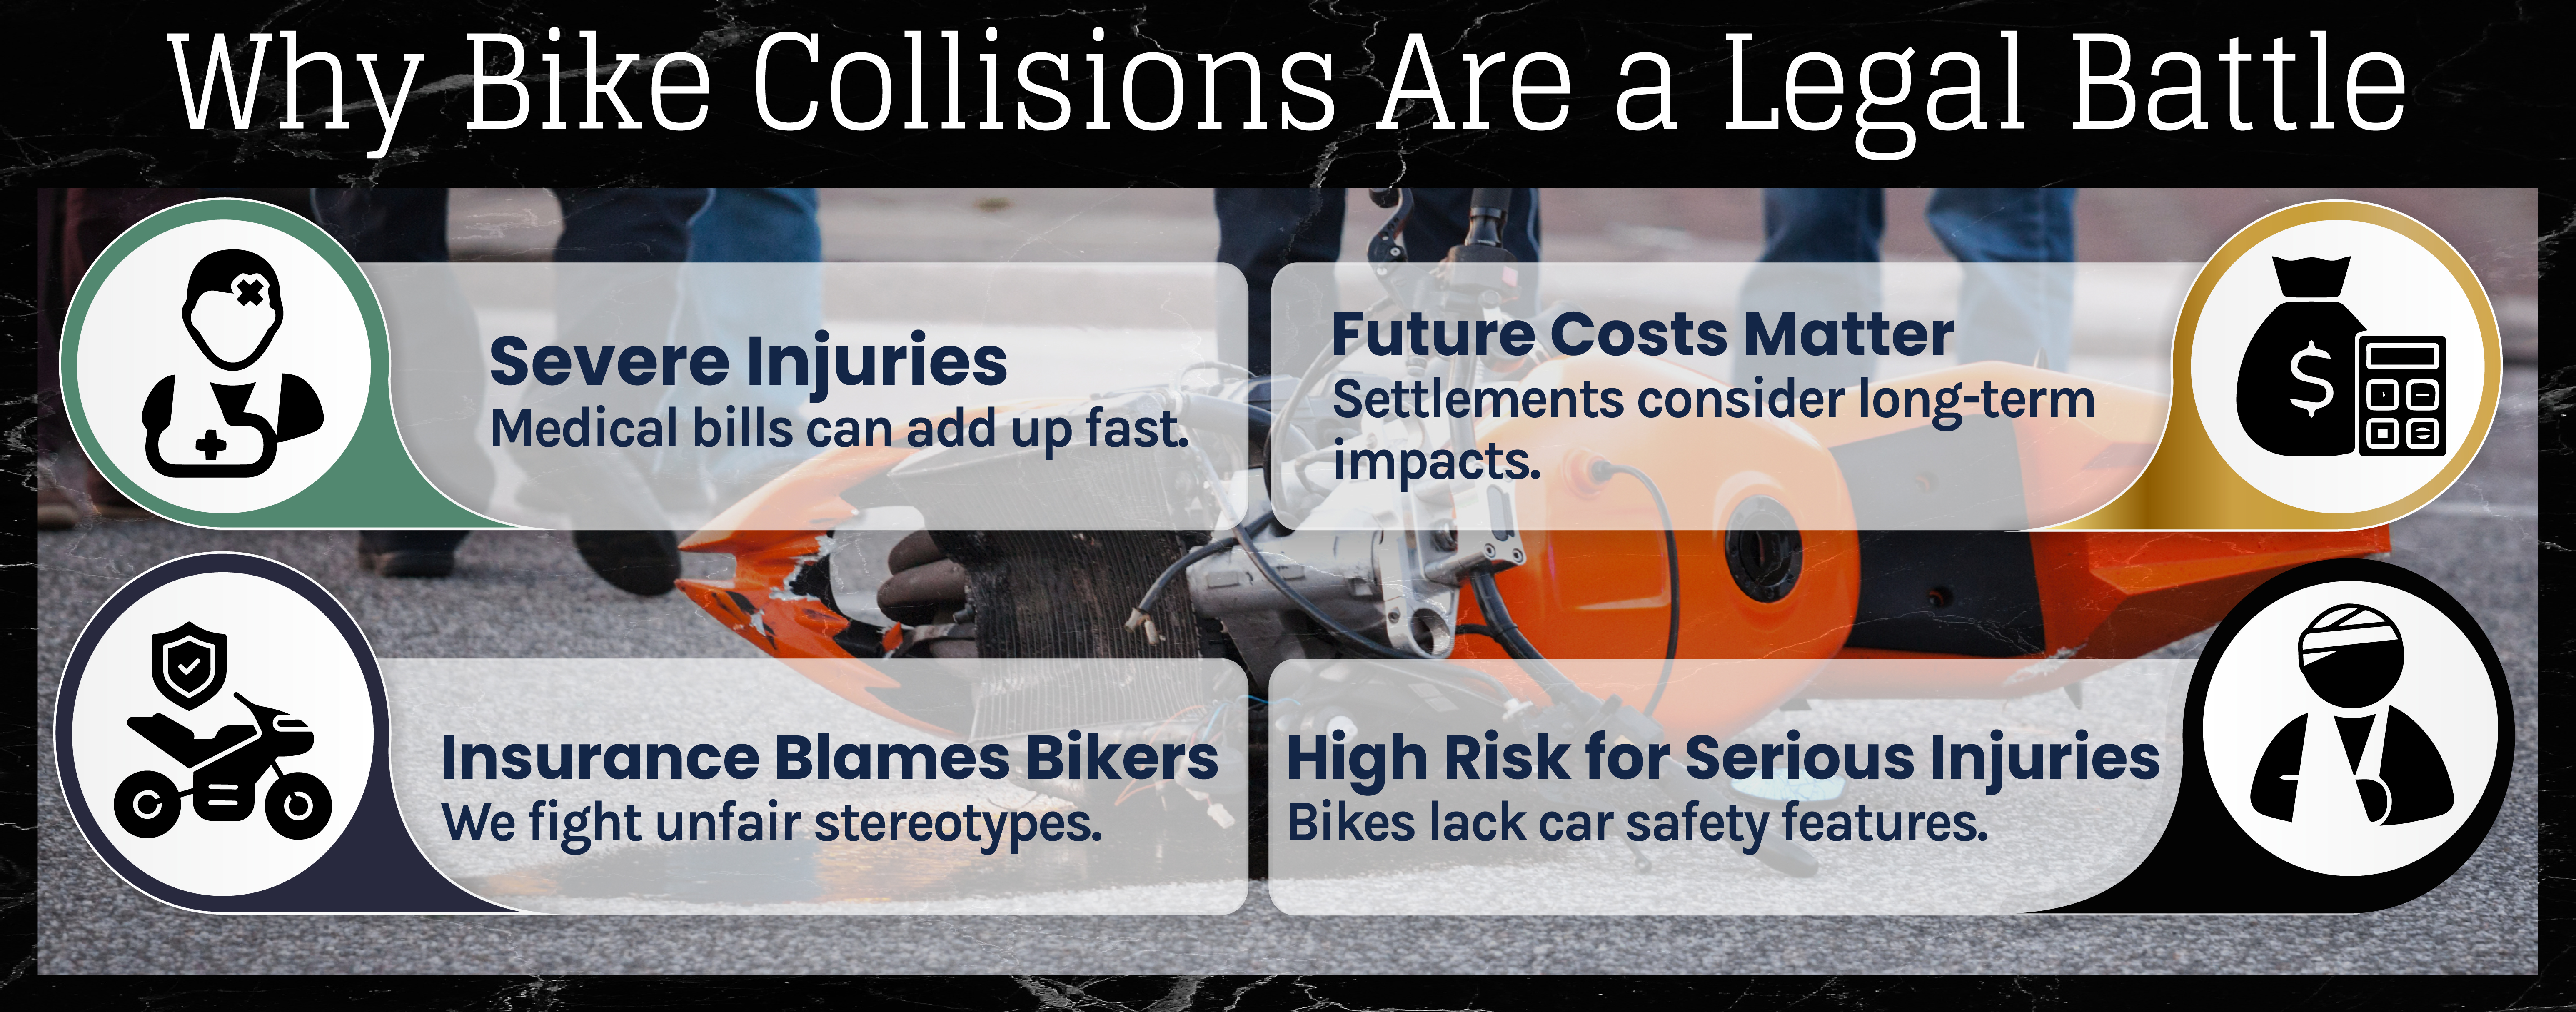 Bike Collisions Legal Battle